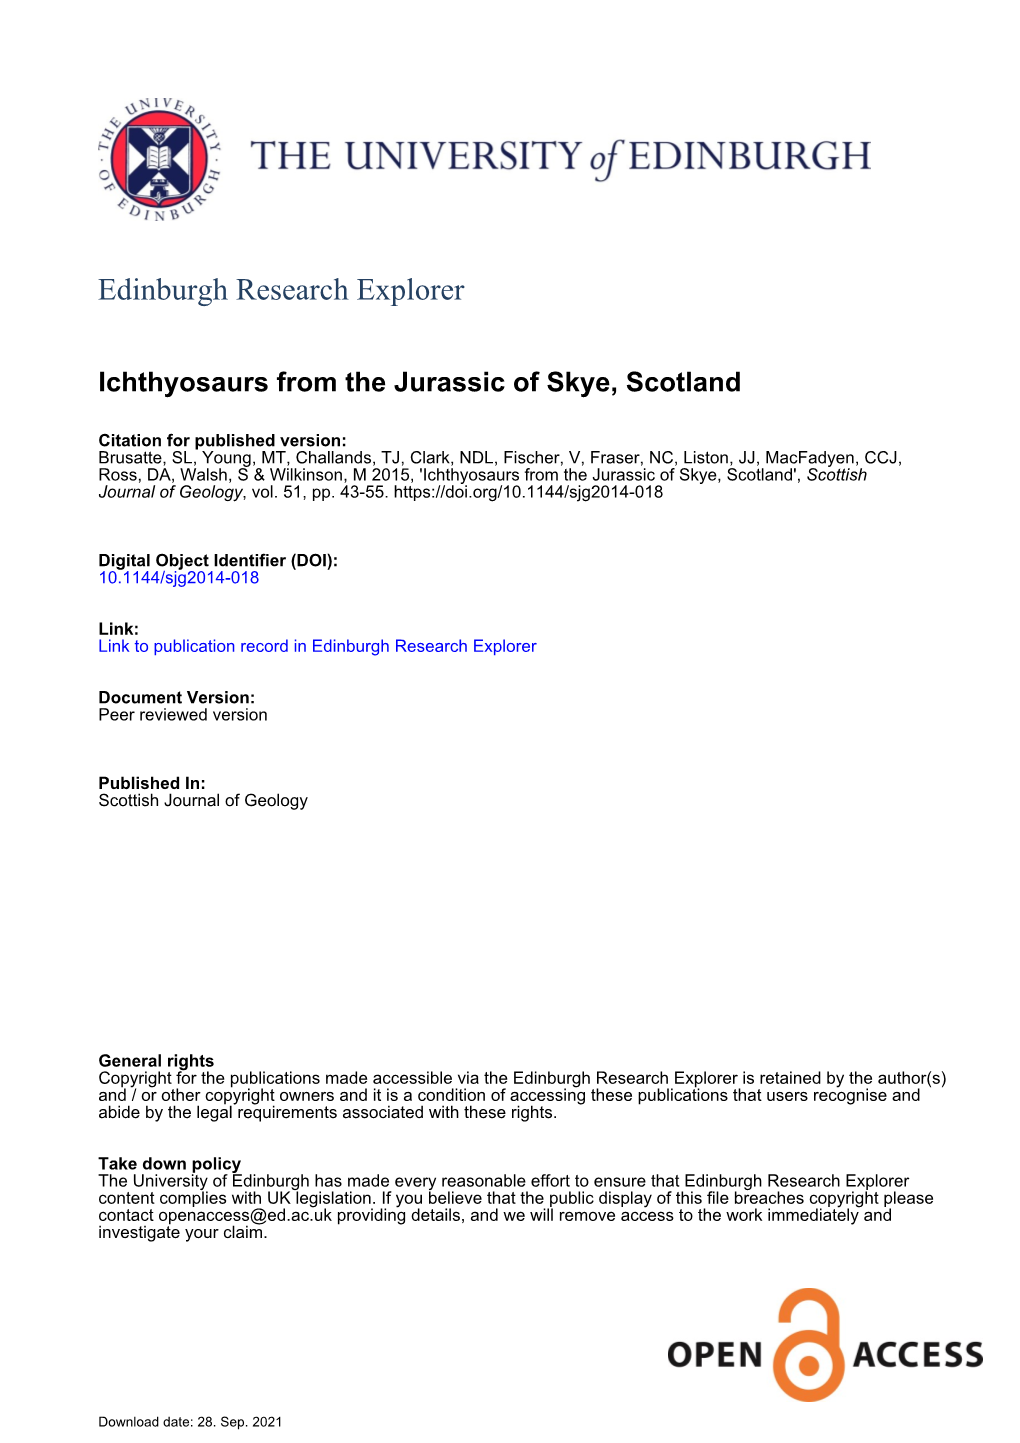 Ichthyosaurs from the Jurassic of Skye, Scotland